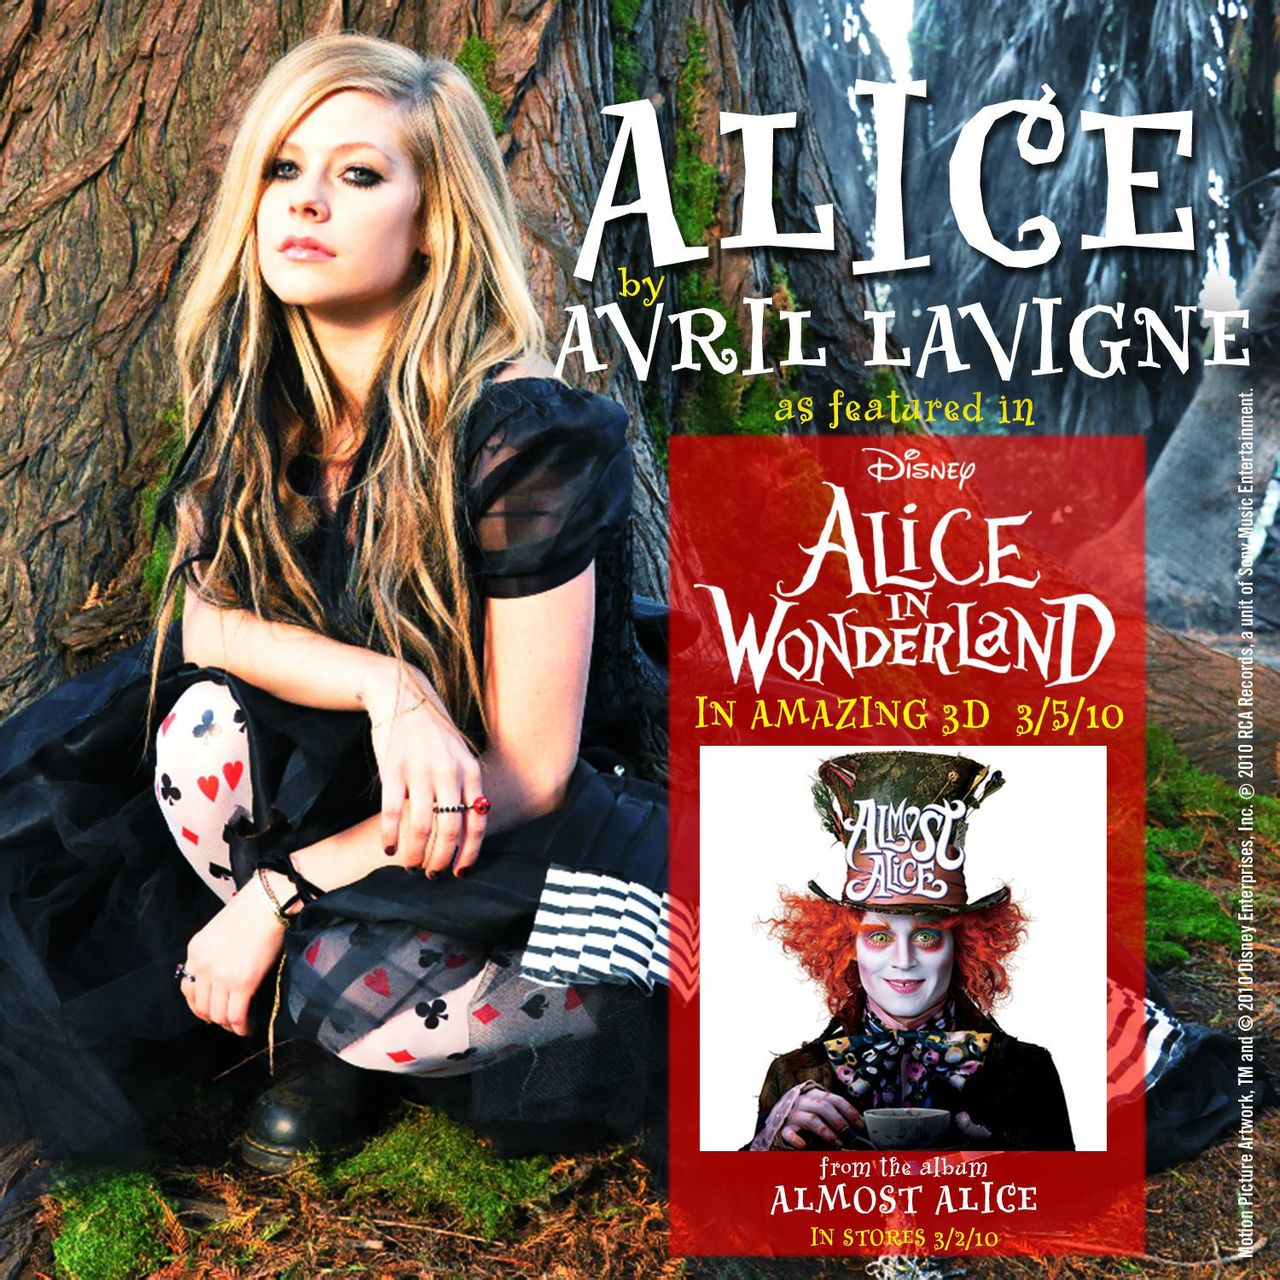 ALICE(電影《愛麗絲夢遊奇境》的主題曲)